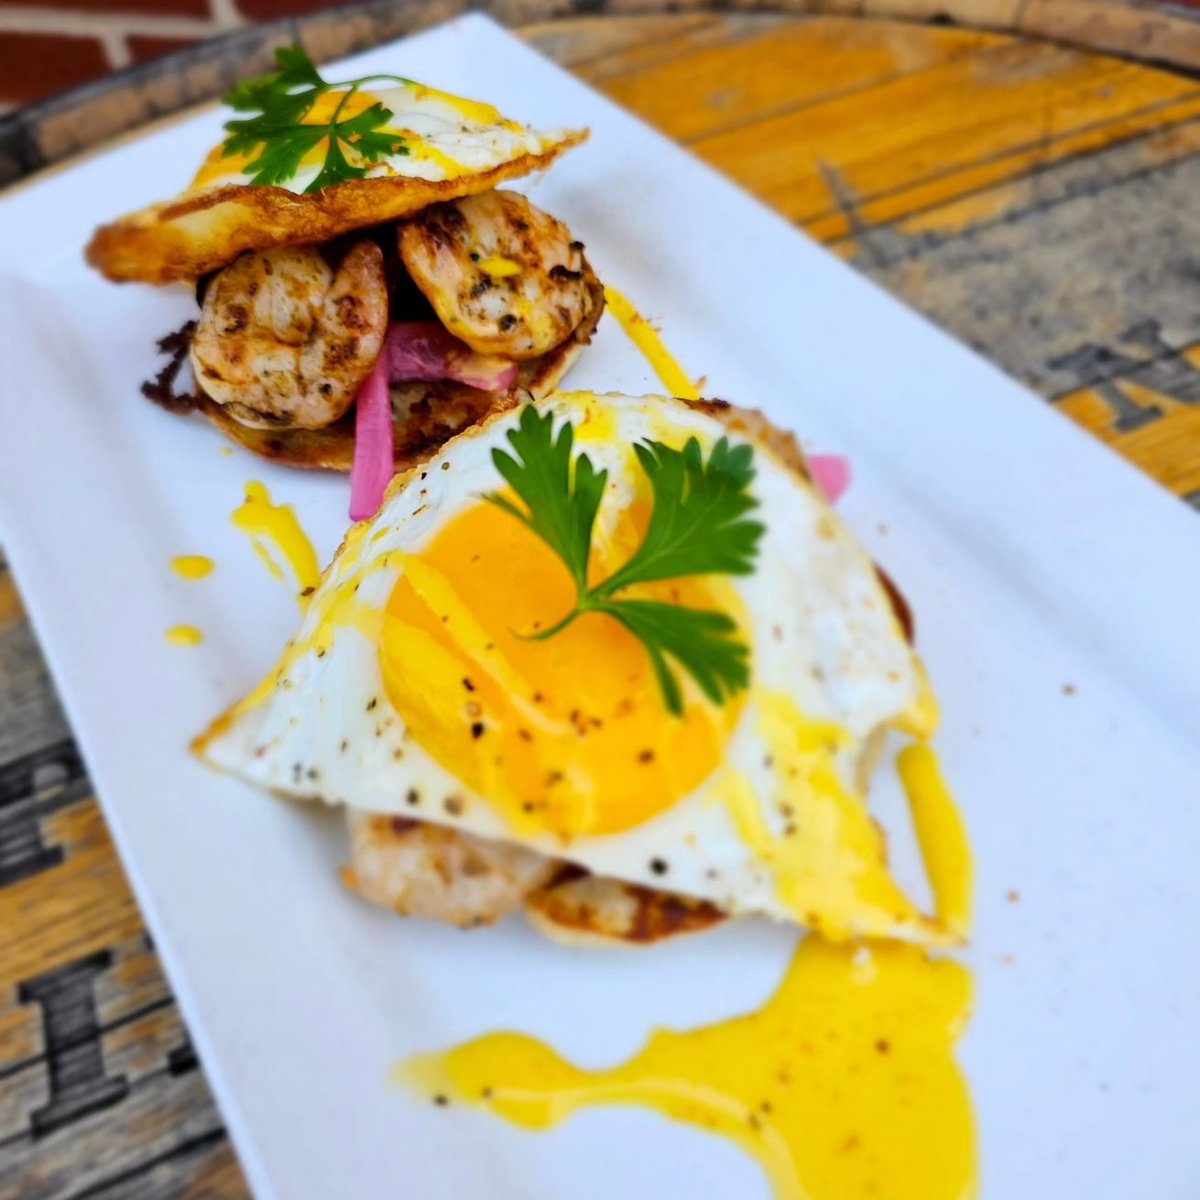 How are you brunch'n this weekend?! Cajun Shrimp Benedict #brunch #specials #pennsport #foodie #foodiechat #phillyfood